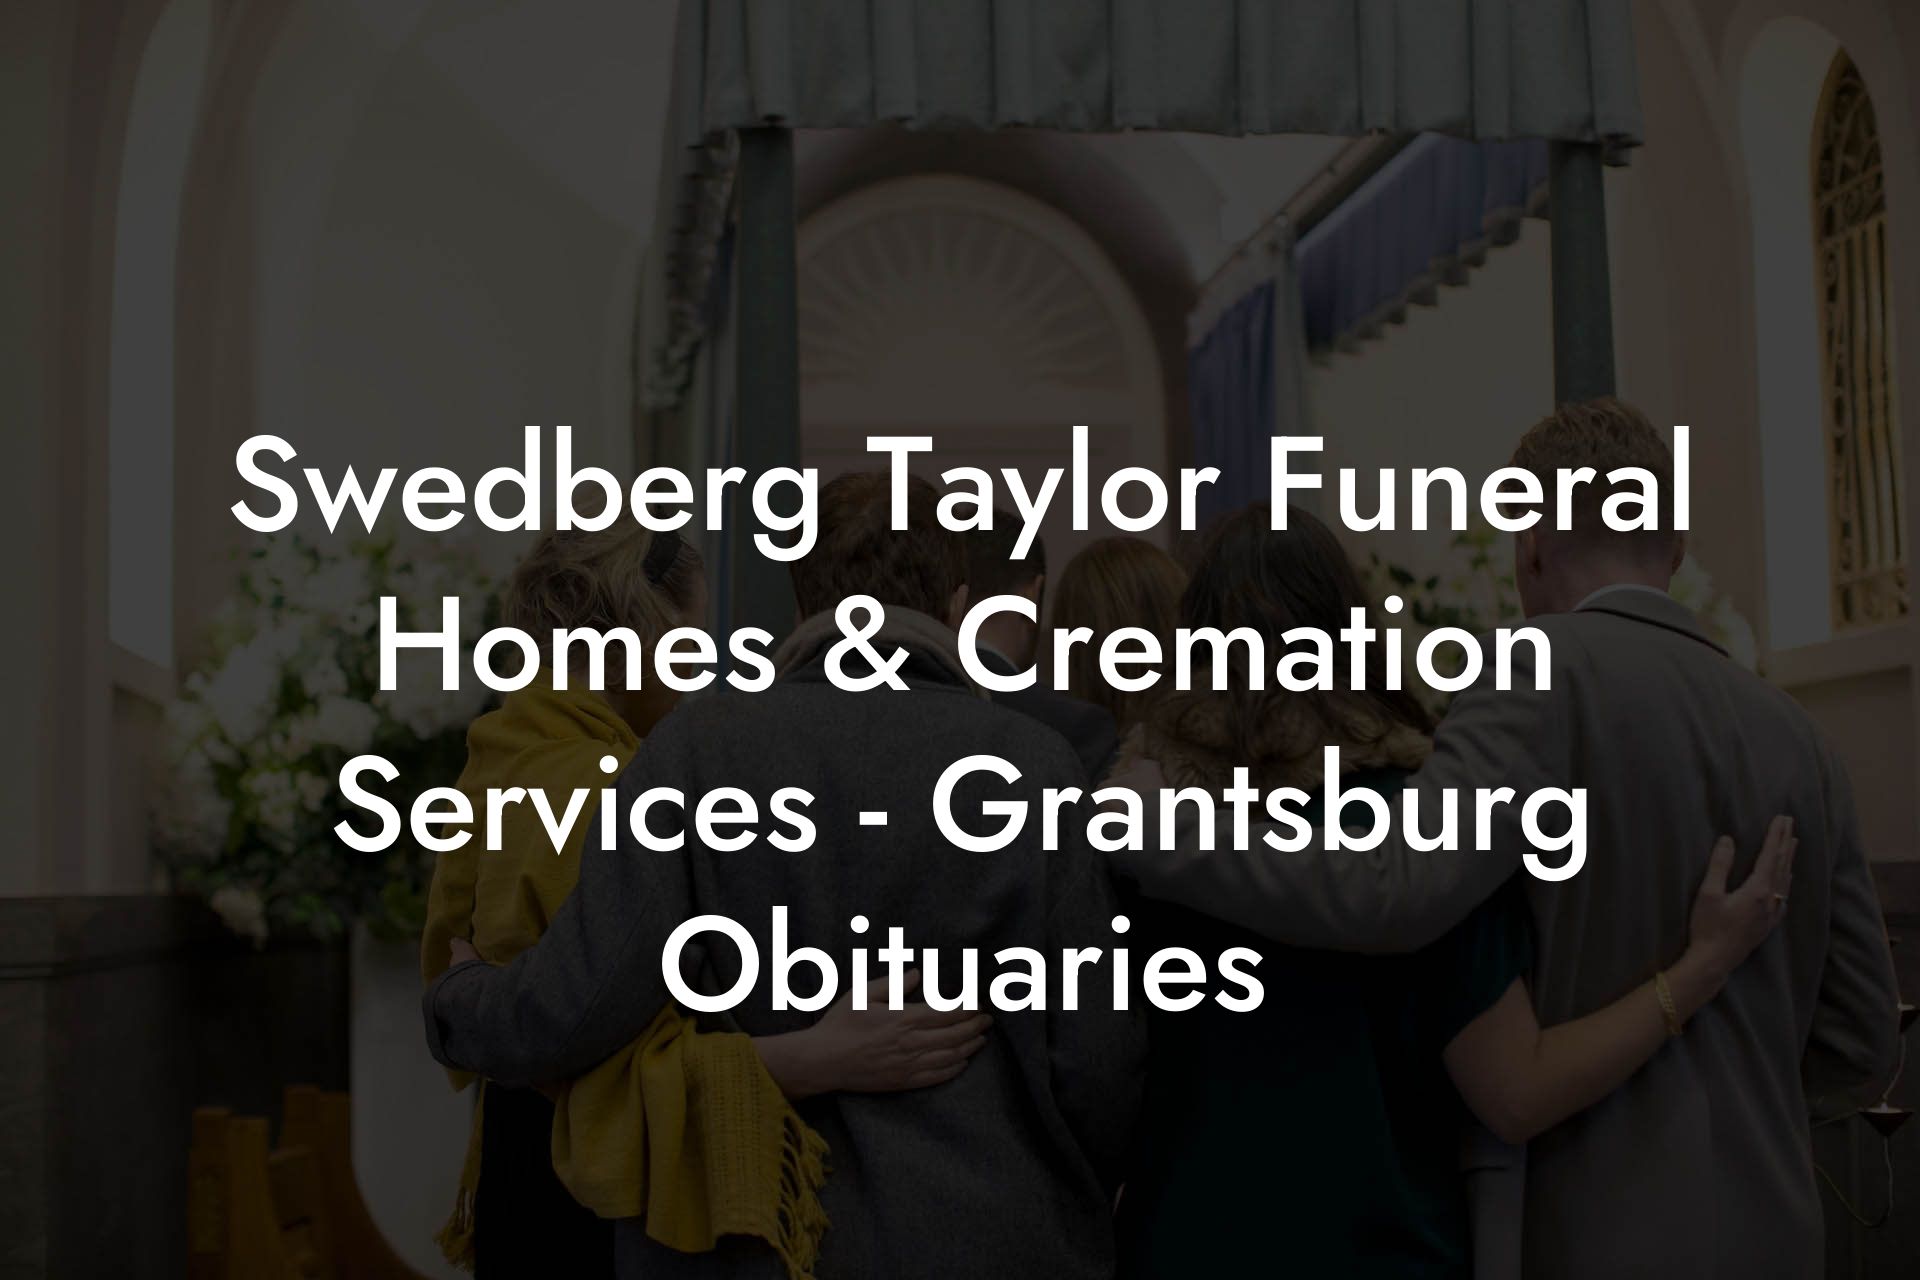 Swedberg Taylor Funeral Homes & Cremation Services - Grantsburg Obituaries